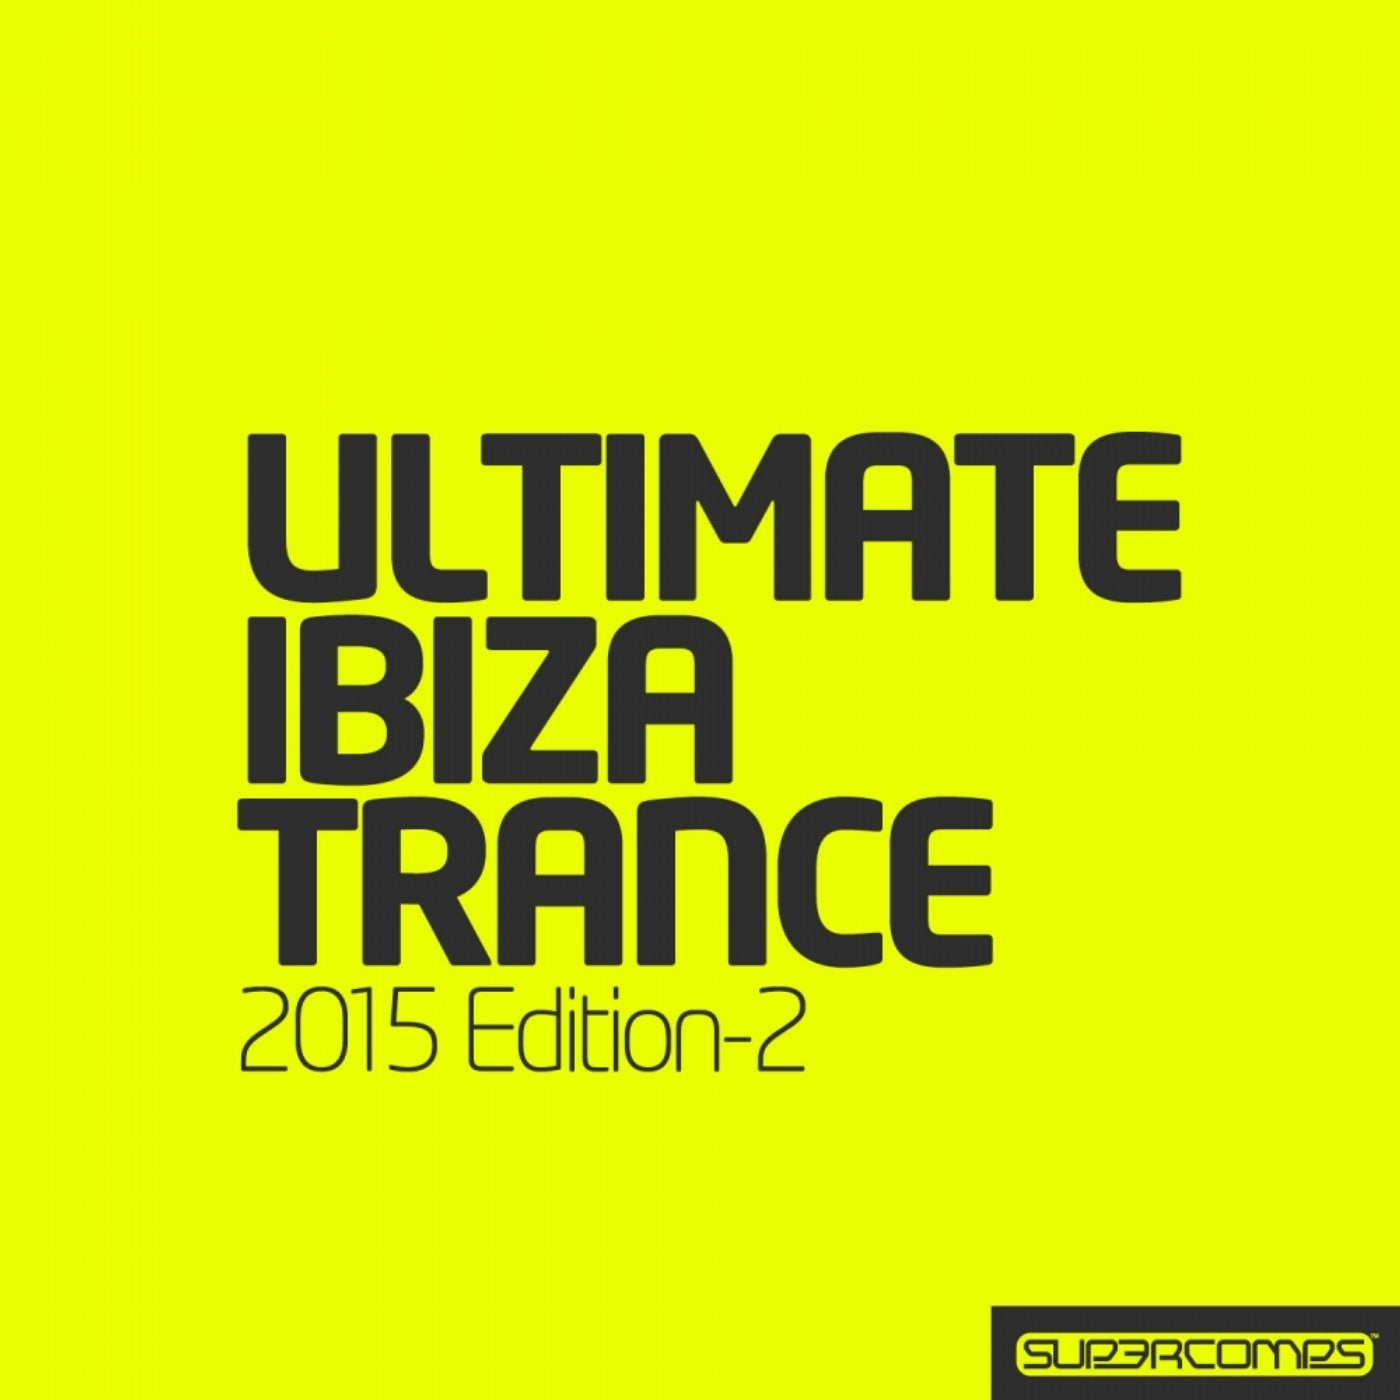 Ultimate Ibiza Trance 2015 Edition-2